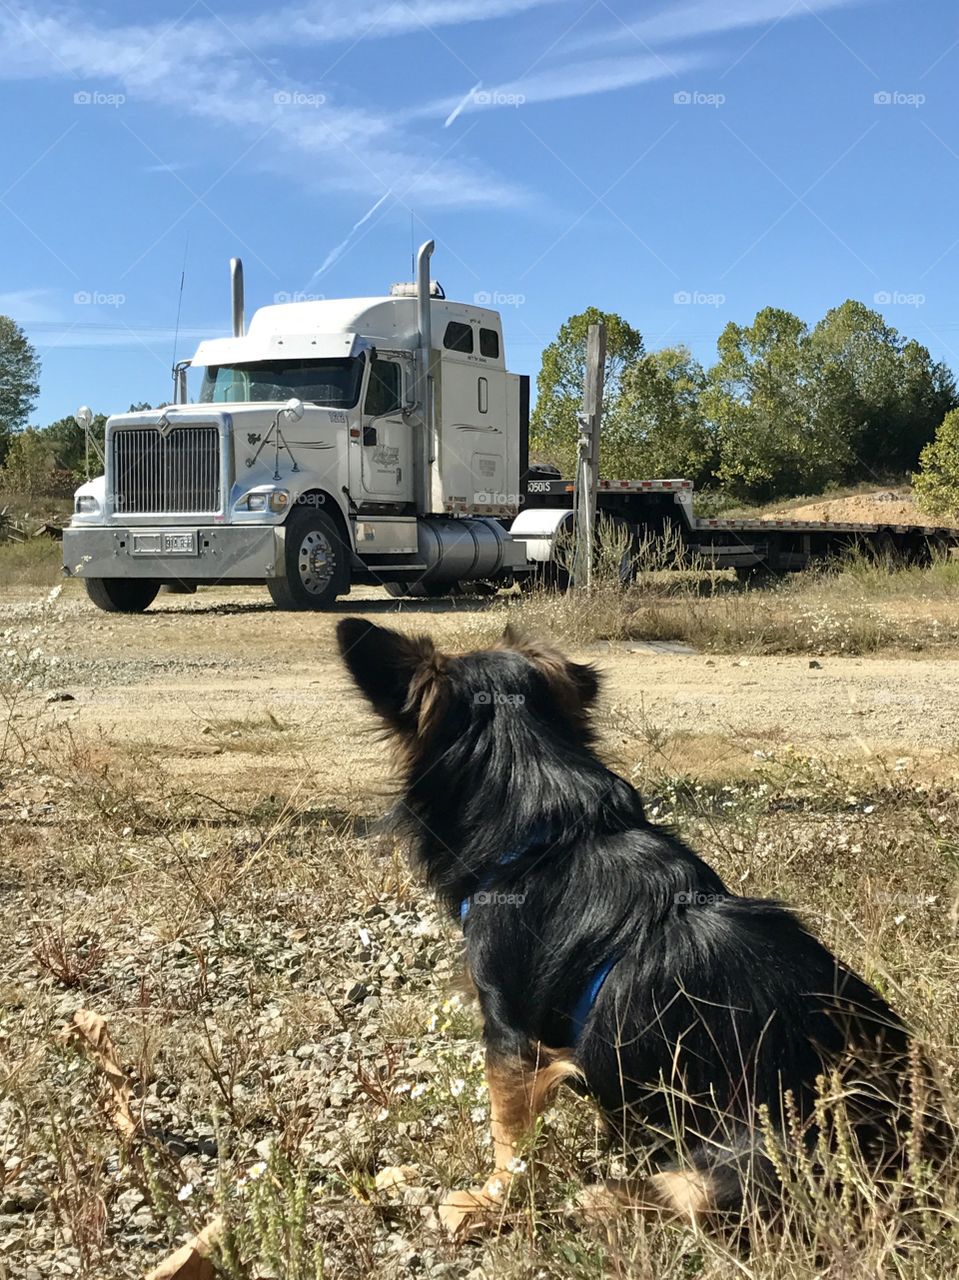 Otis loves big trucks & motorcycles